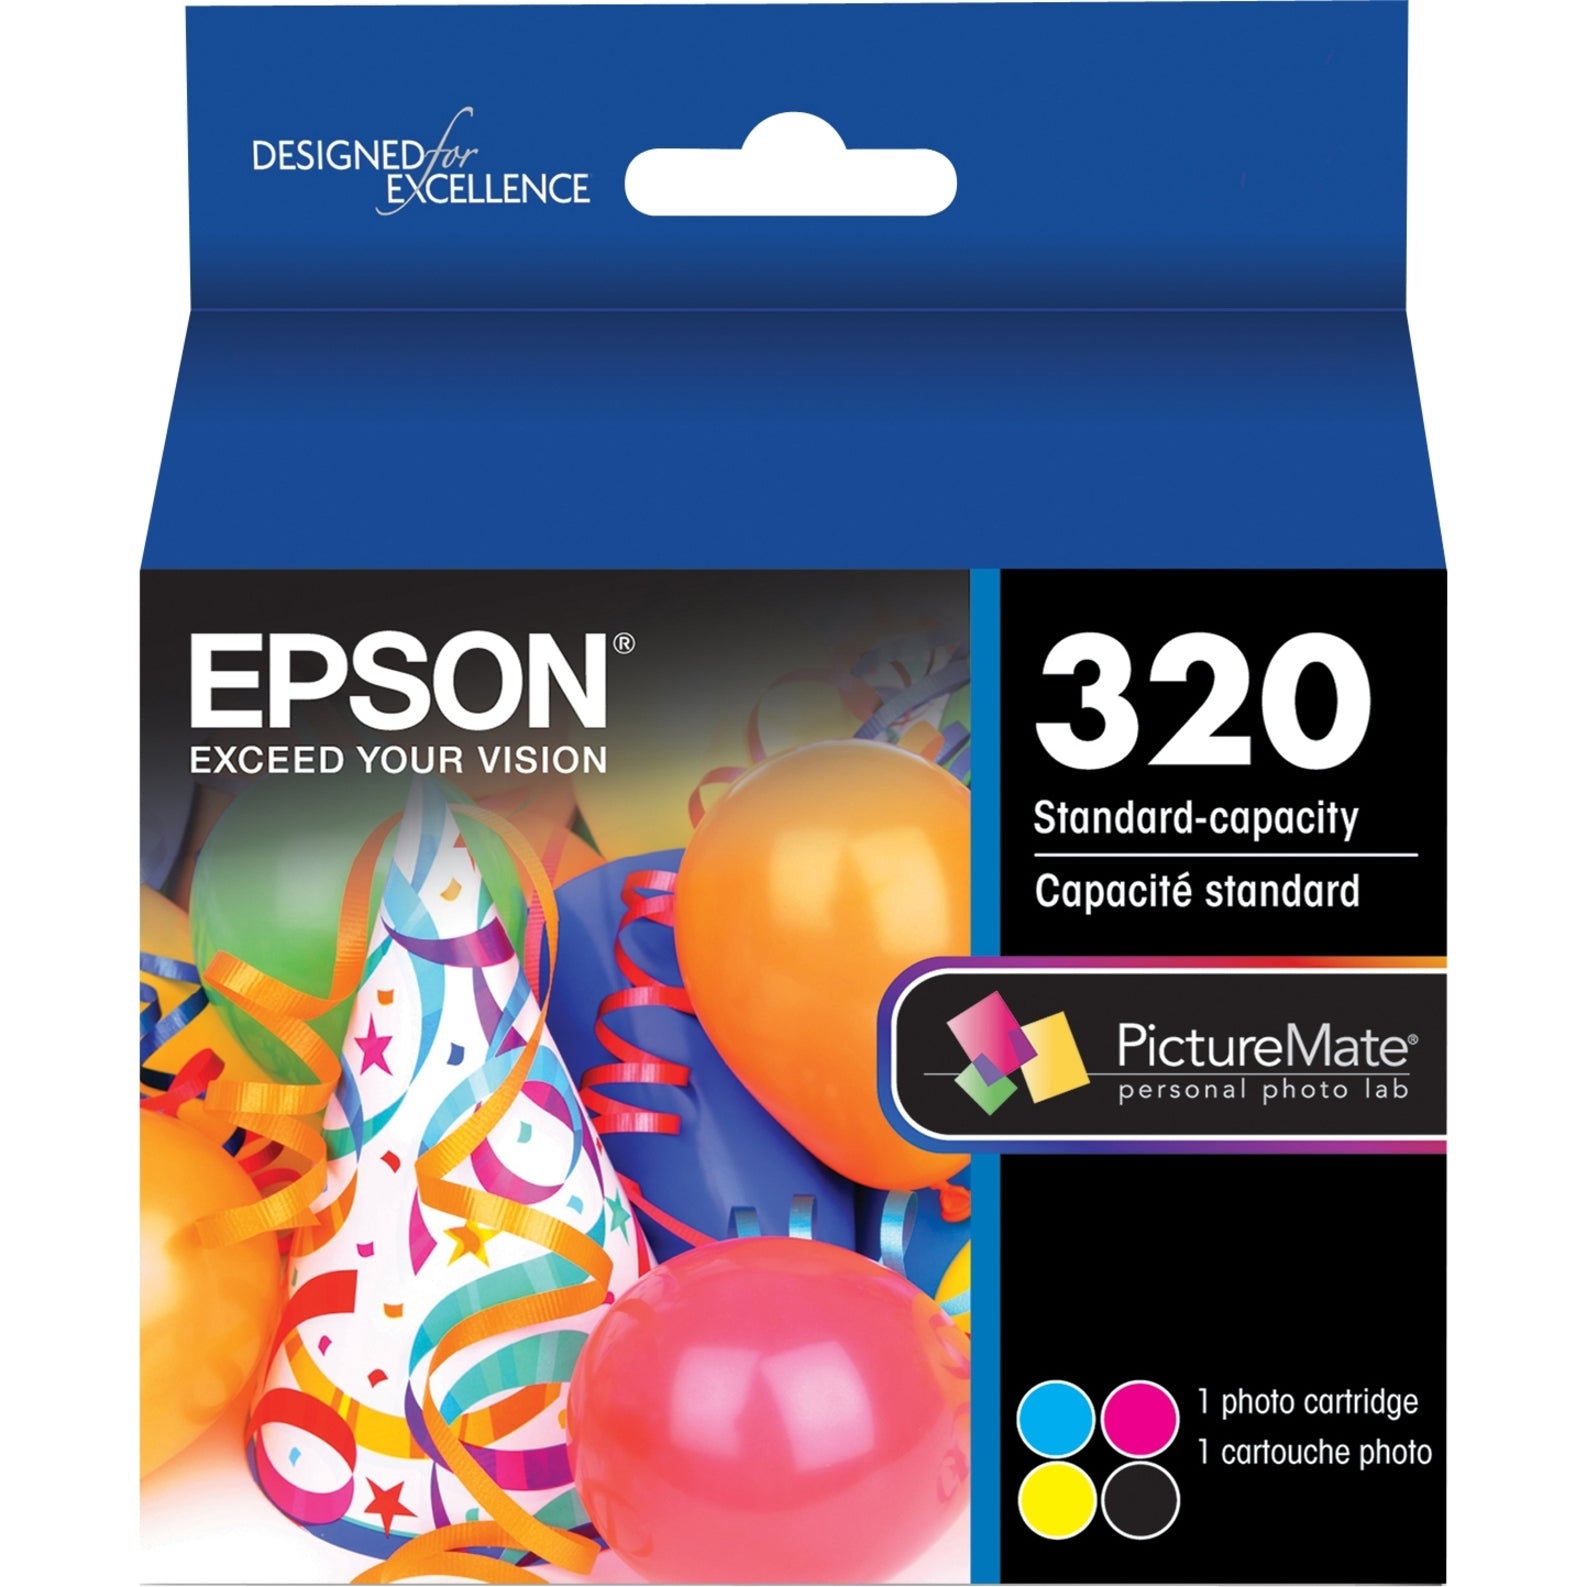 Epson T320 PictureMate 400 Series Photo Cartridge, Standard-capacity Ink Cartridge for Epson PictureMate PM-400 Printer